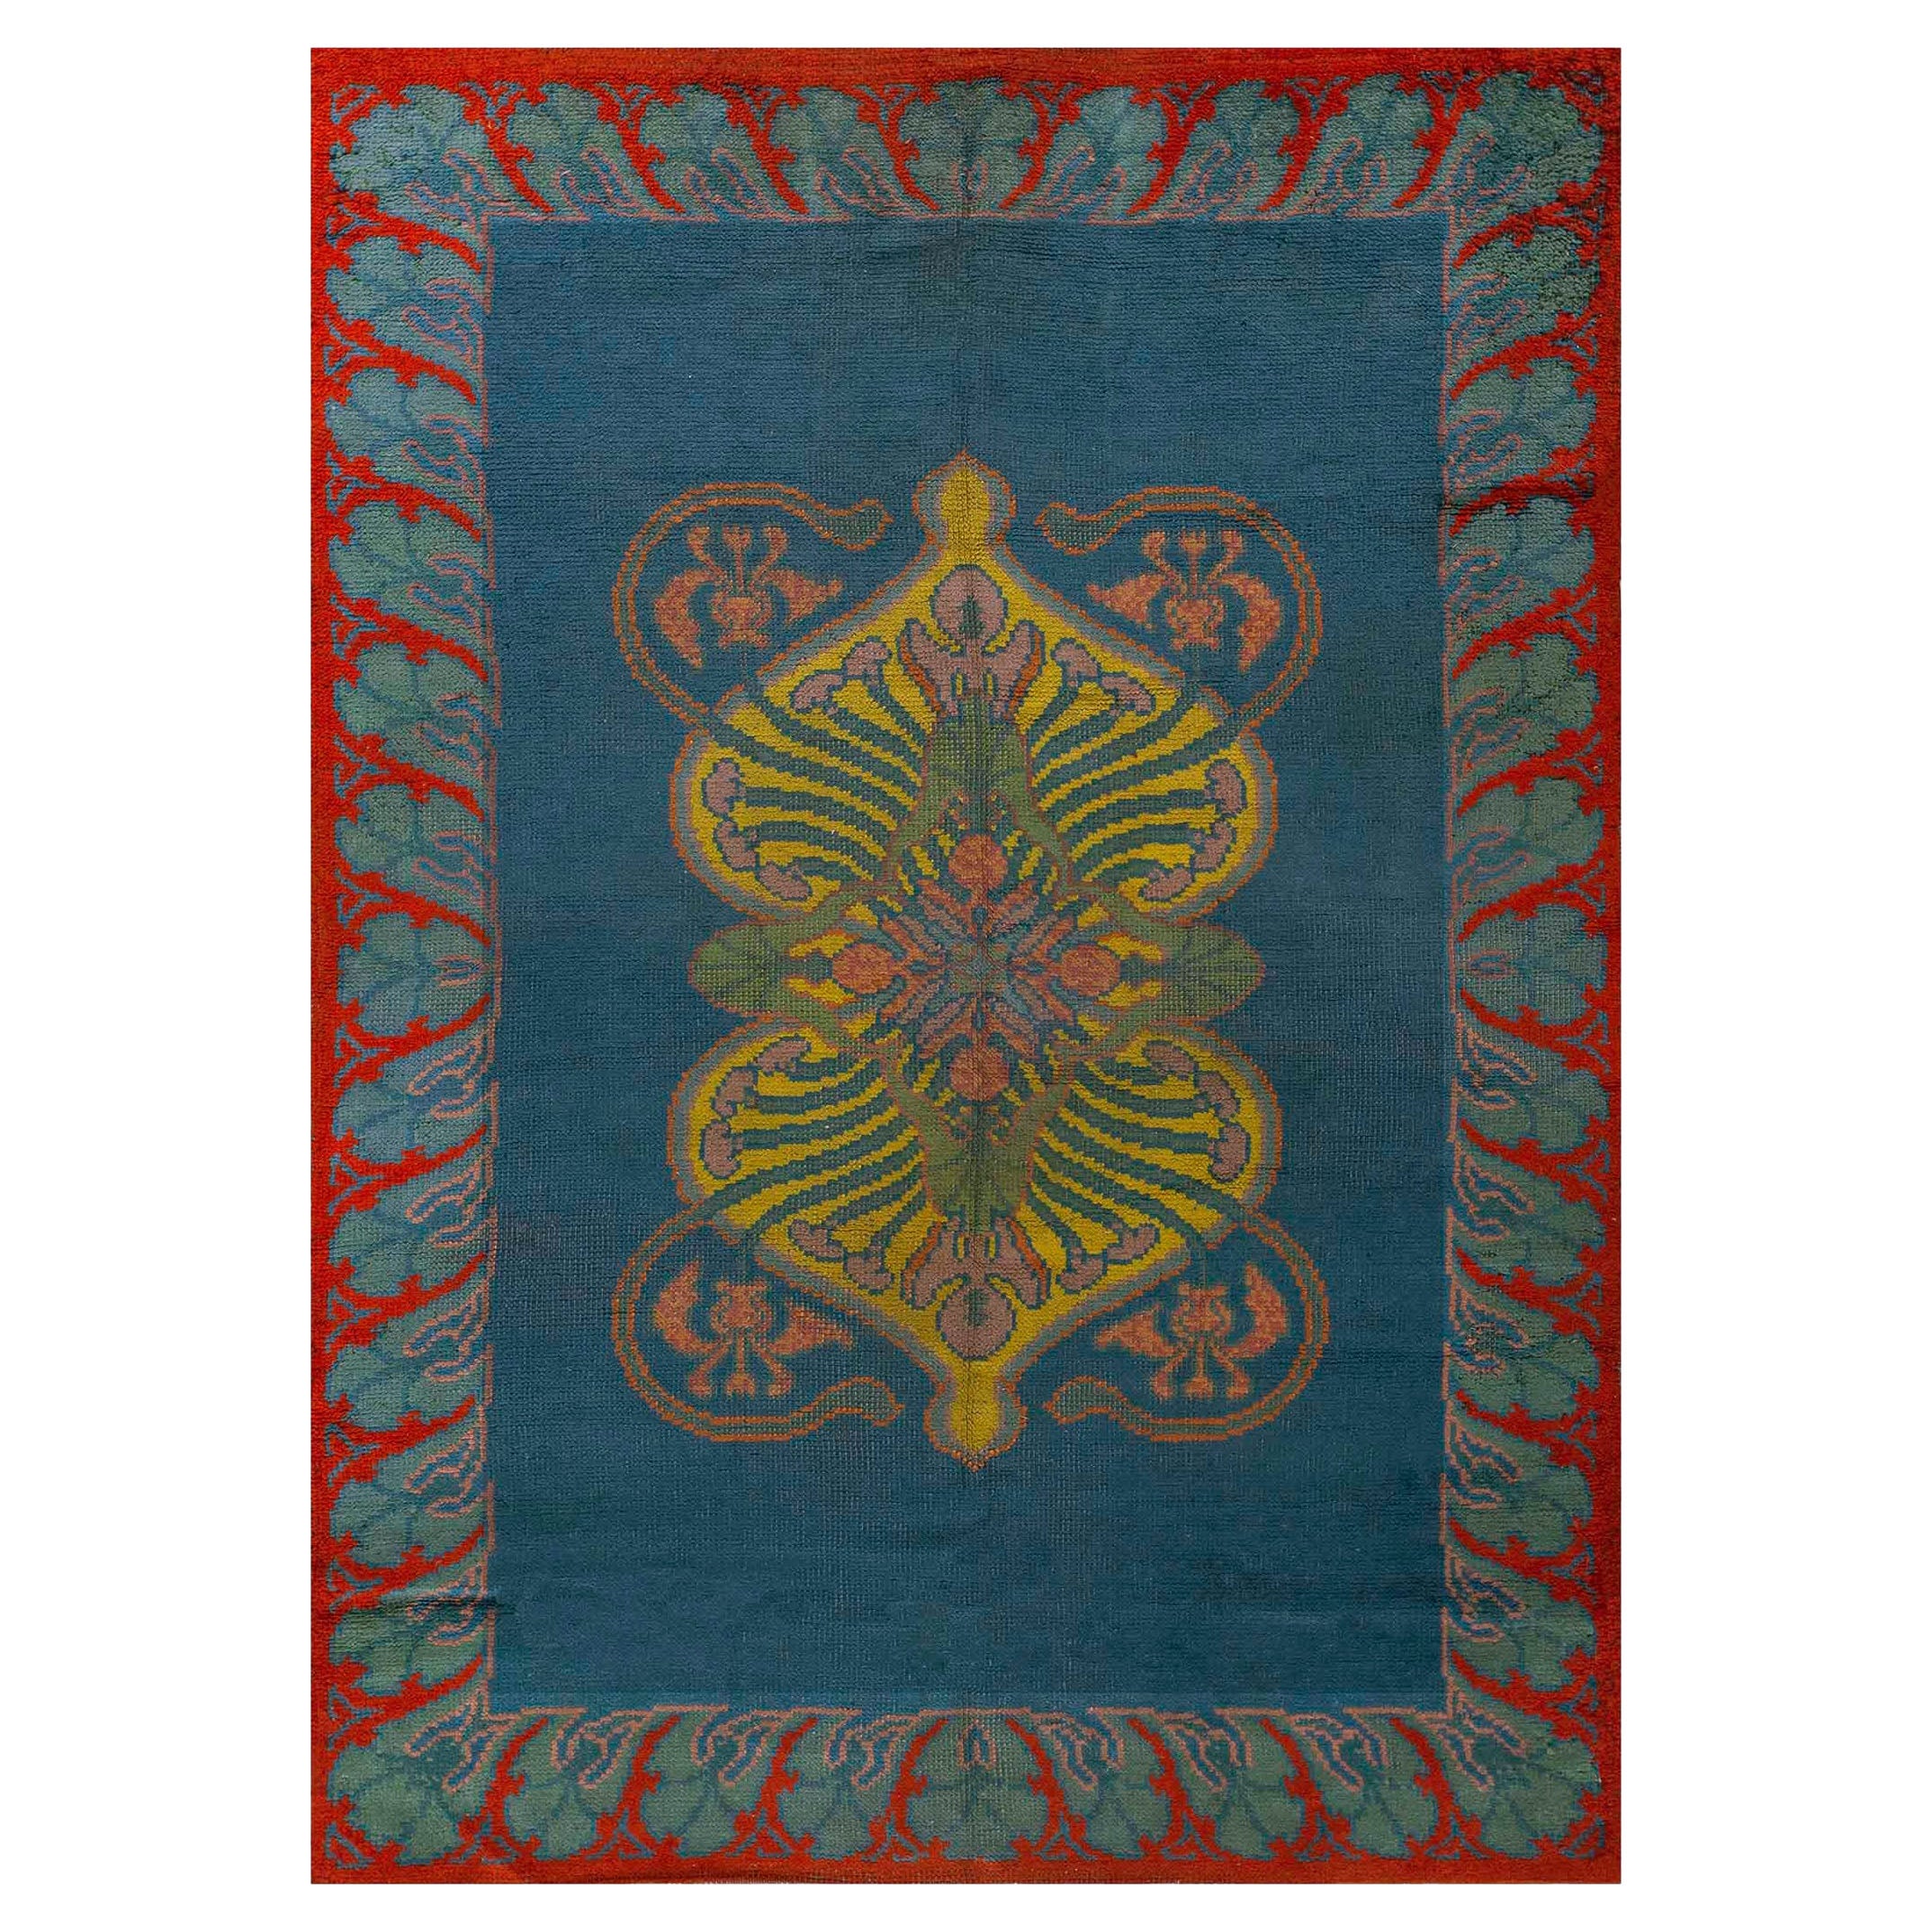 Early 20th Century Irish Donegal Arts & Crafts Carpet ( 5'7" x 7'9" - 170 x 296)